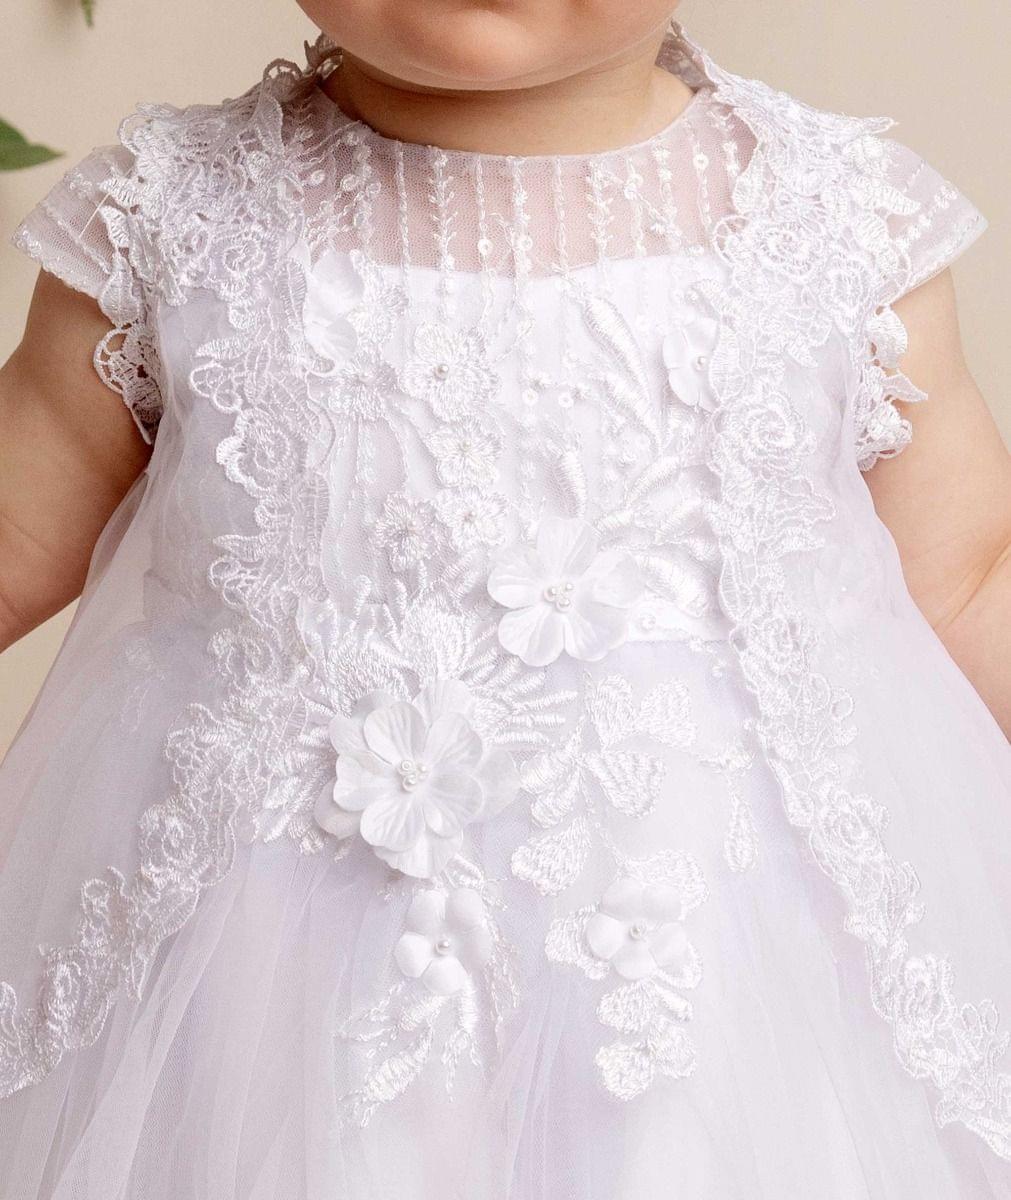 White Floral Christening Dress & Overlay